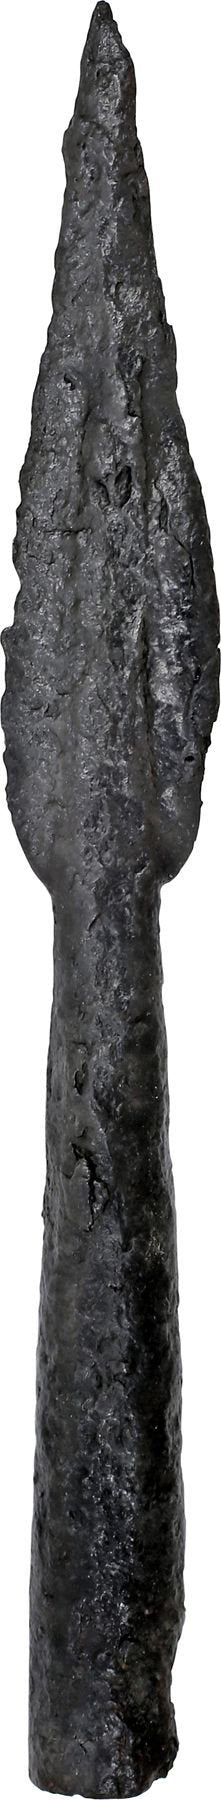 ROMAN LANCE POINT, 100-300 AD - Fagan Arms